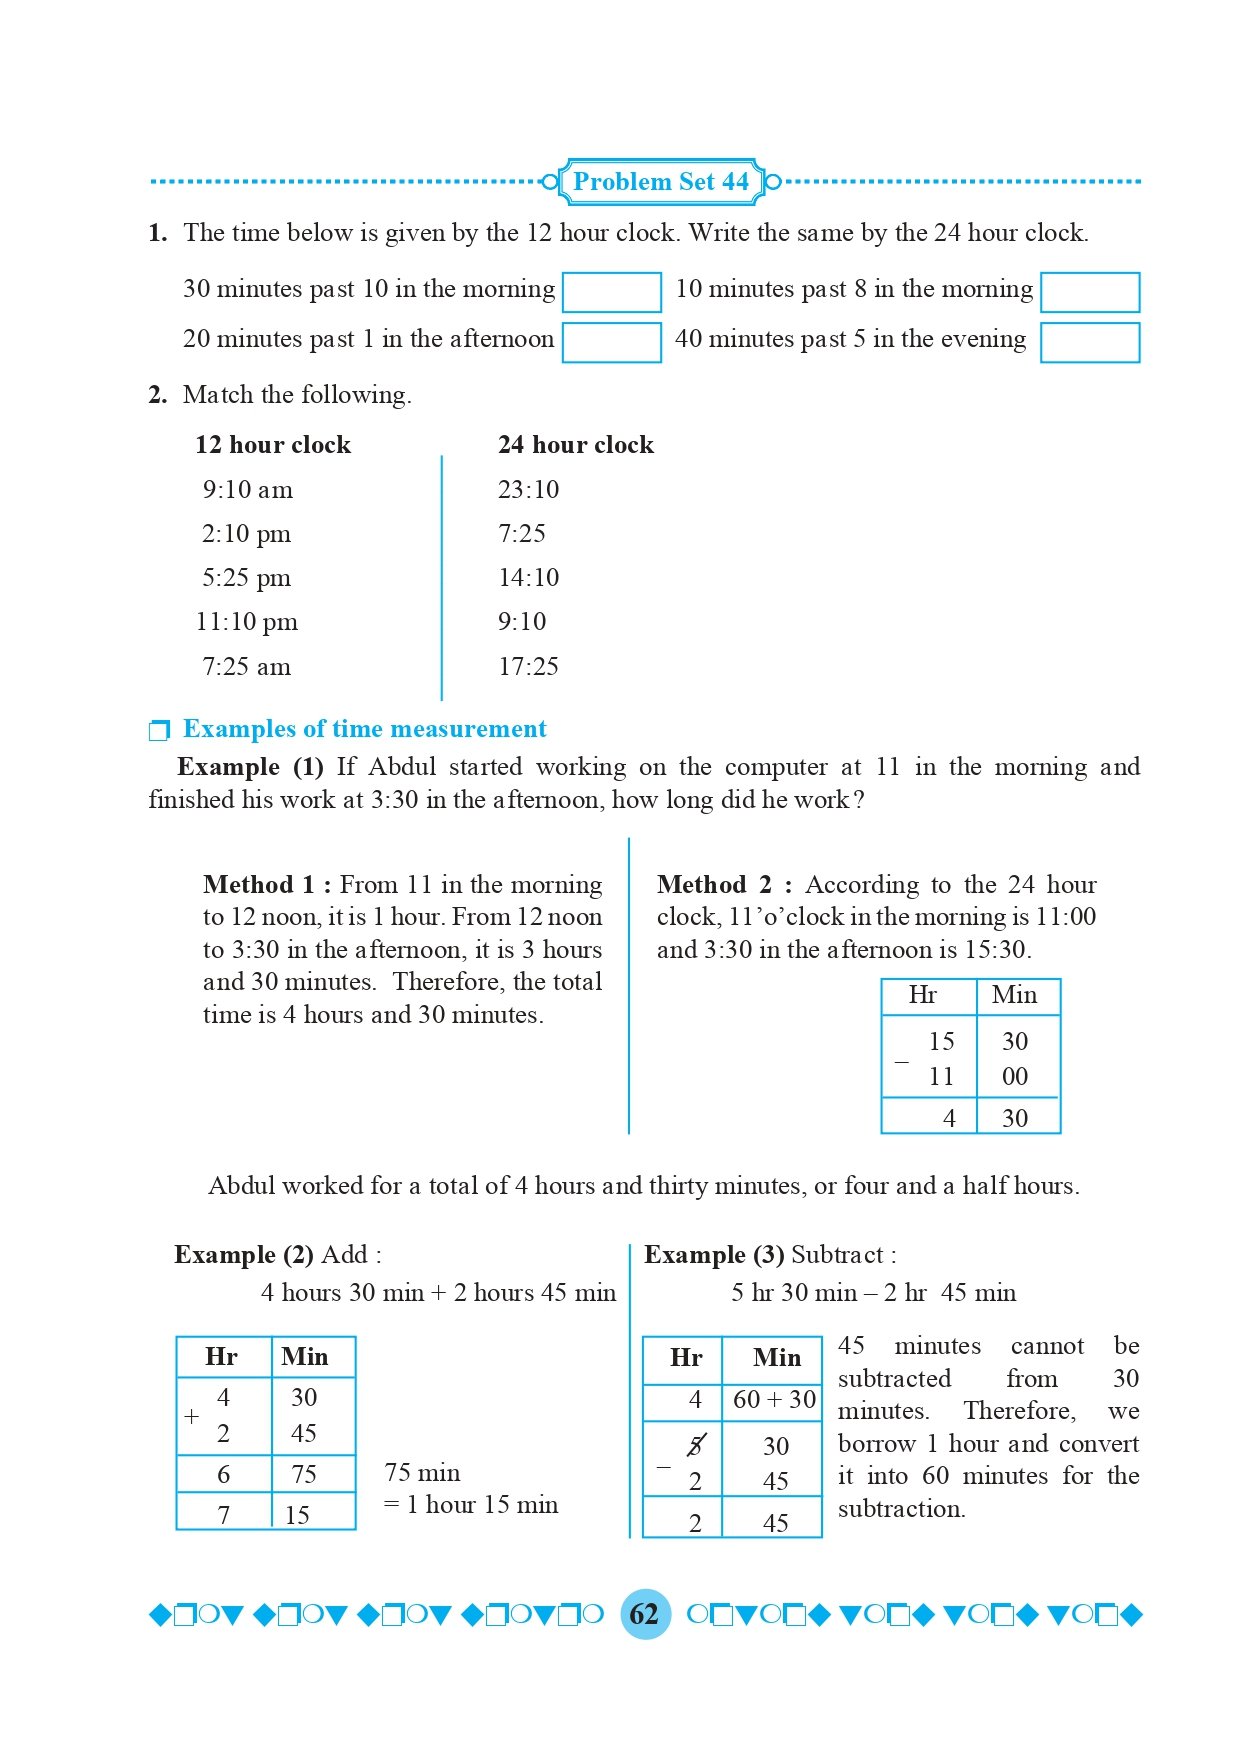 maharashtra-board-5th-standard-maths-book-pdf